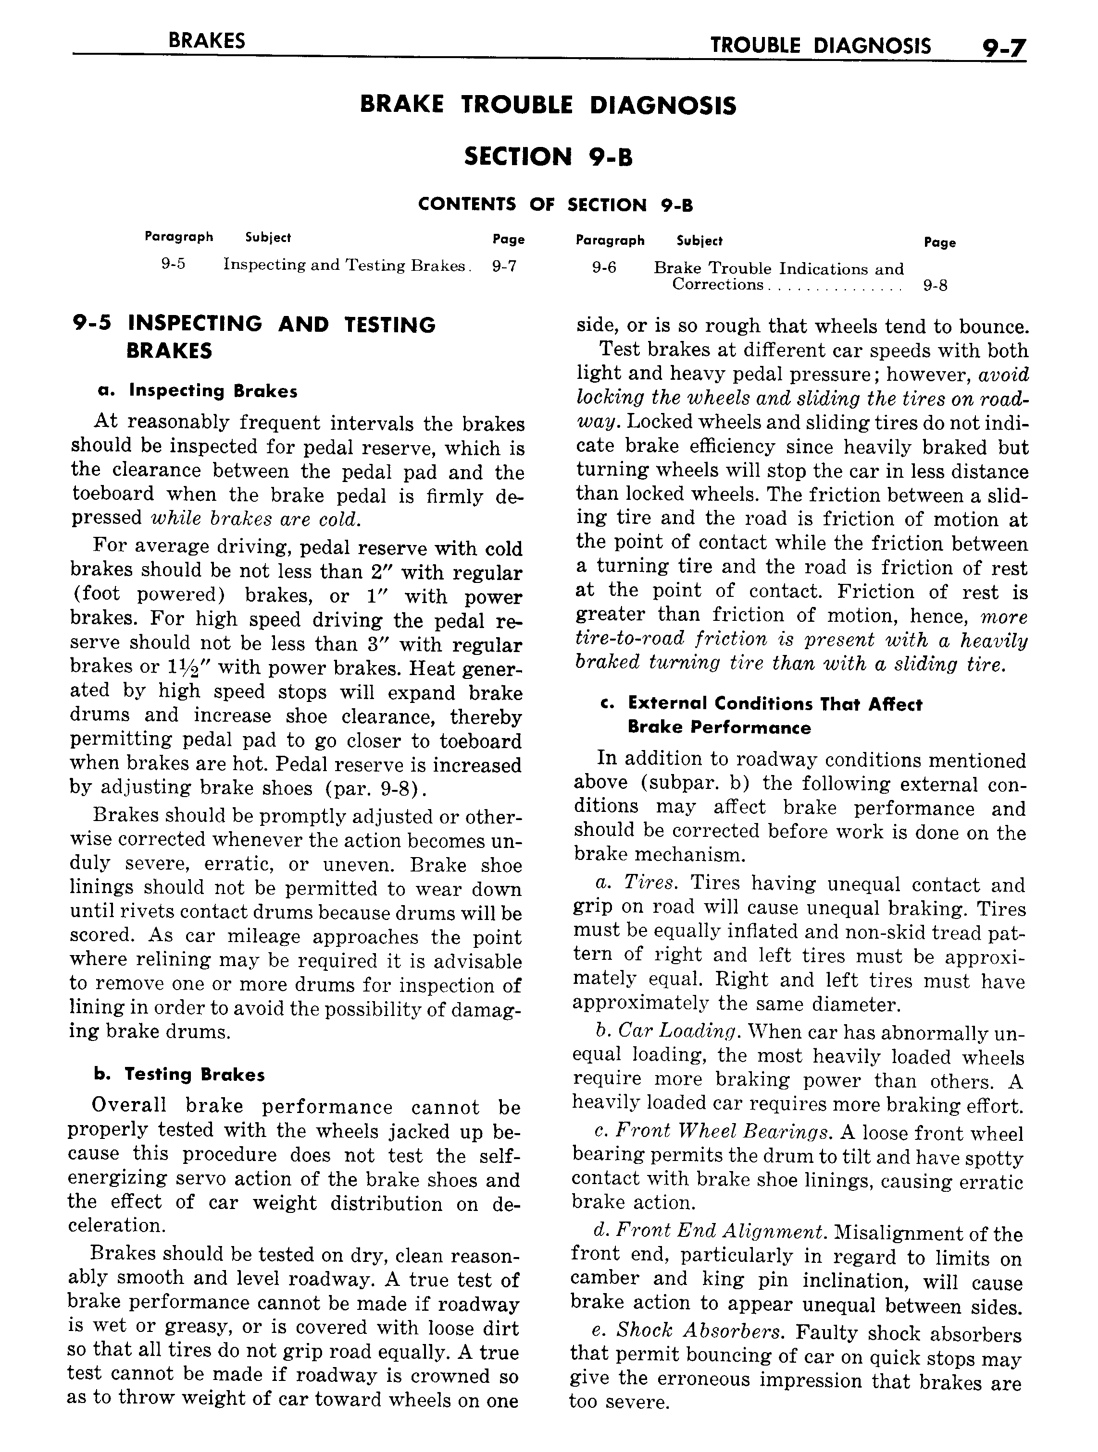 n_10 1957 Buick Shop Manual - Brakes-007-007.jpg